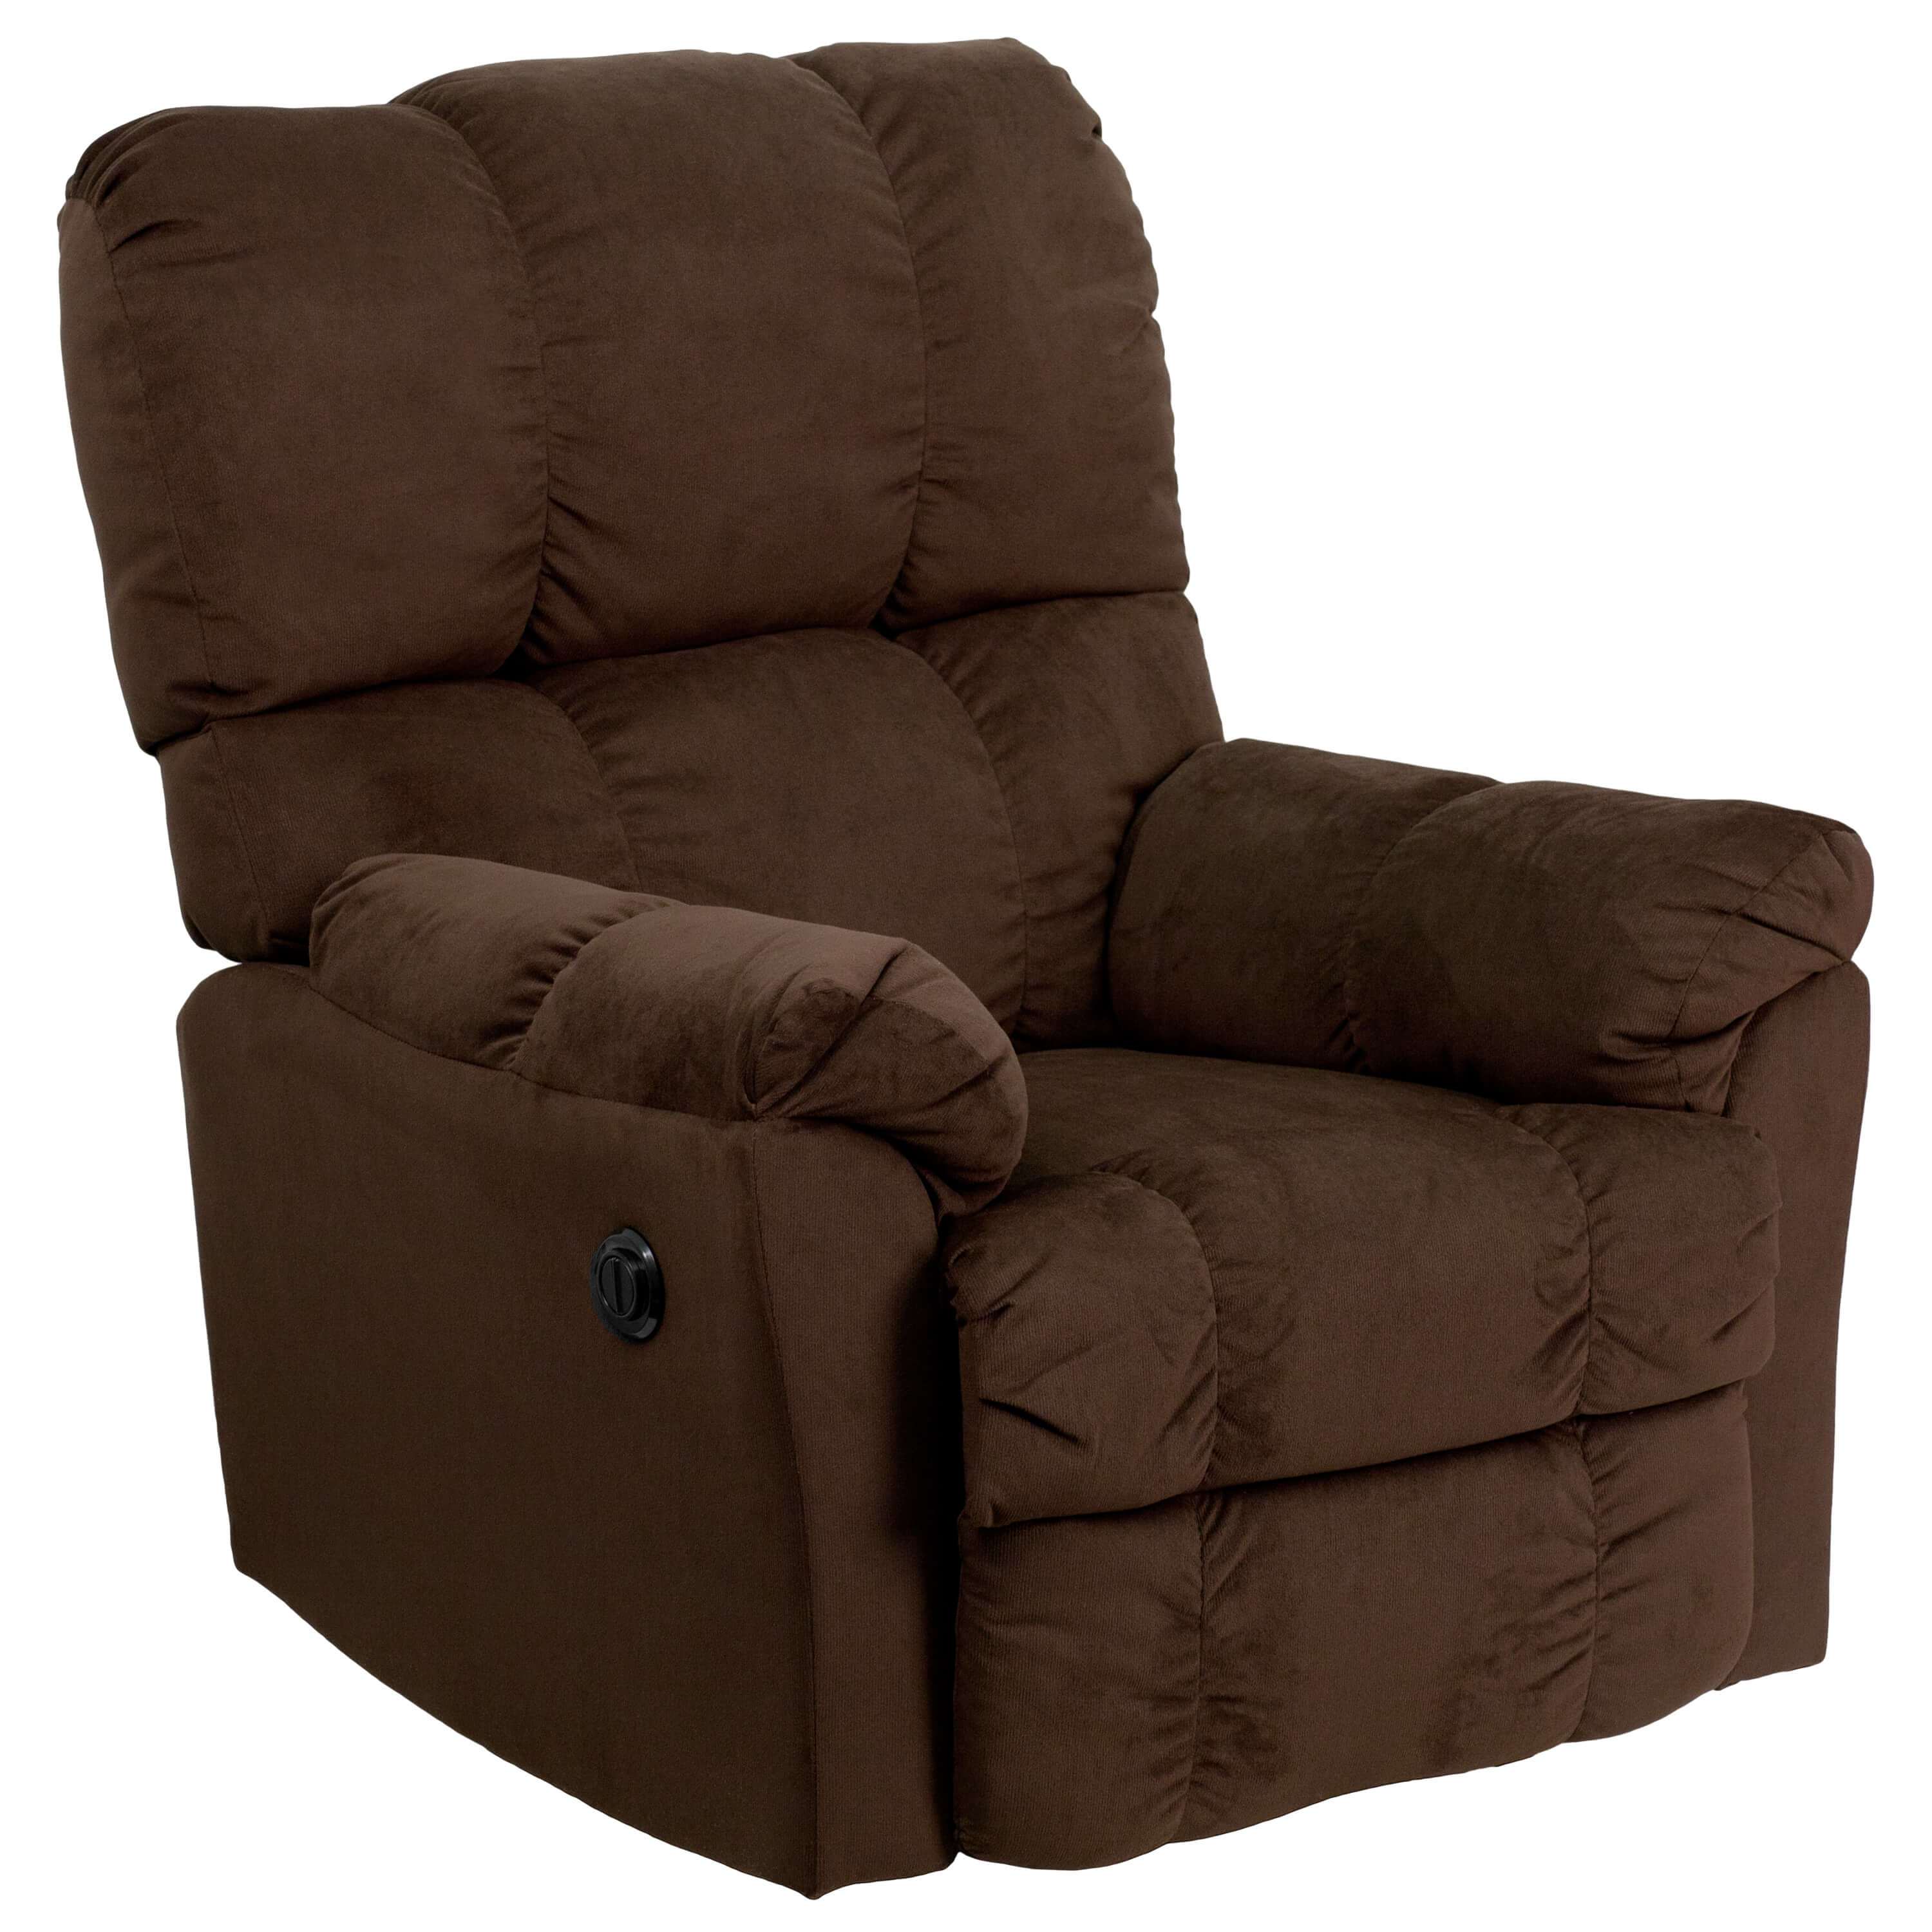 Modern recliner chair CUB AM P9320 4171 GG FLA 1